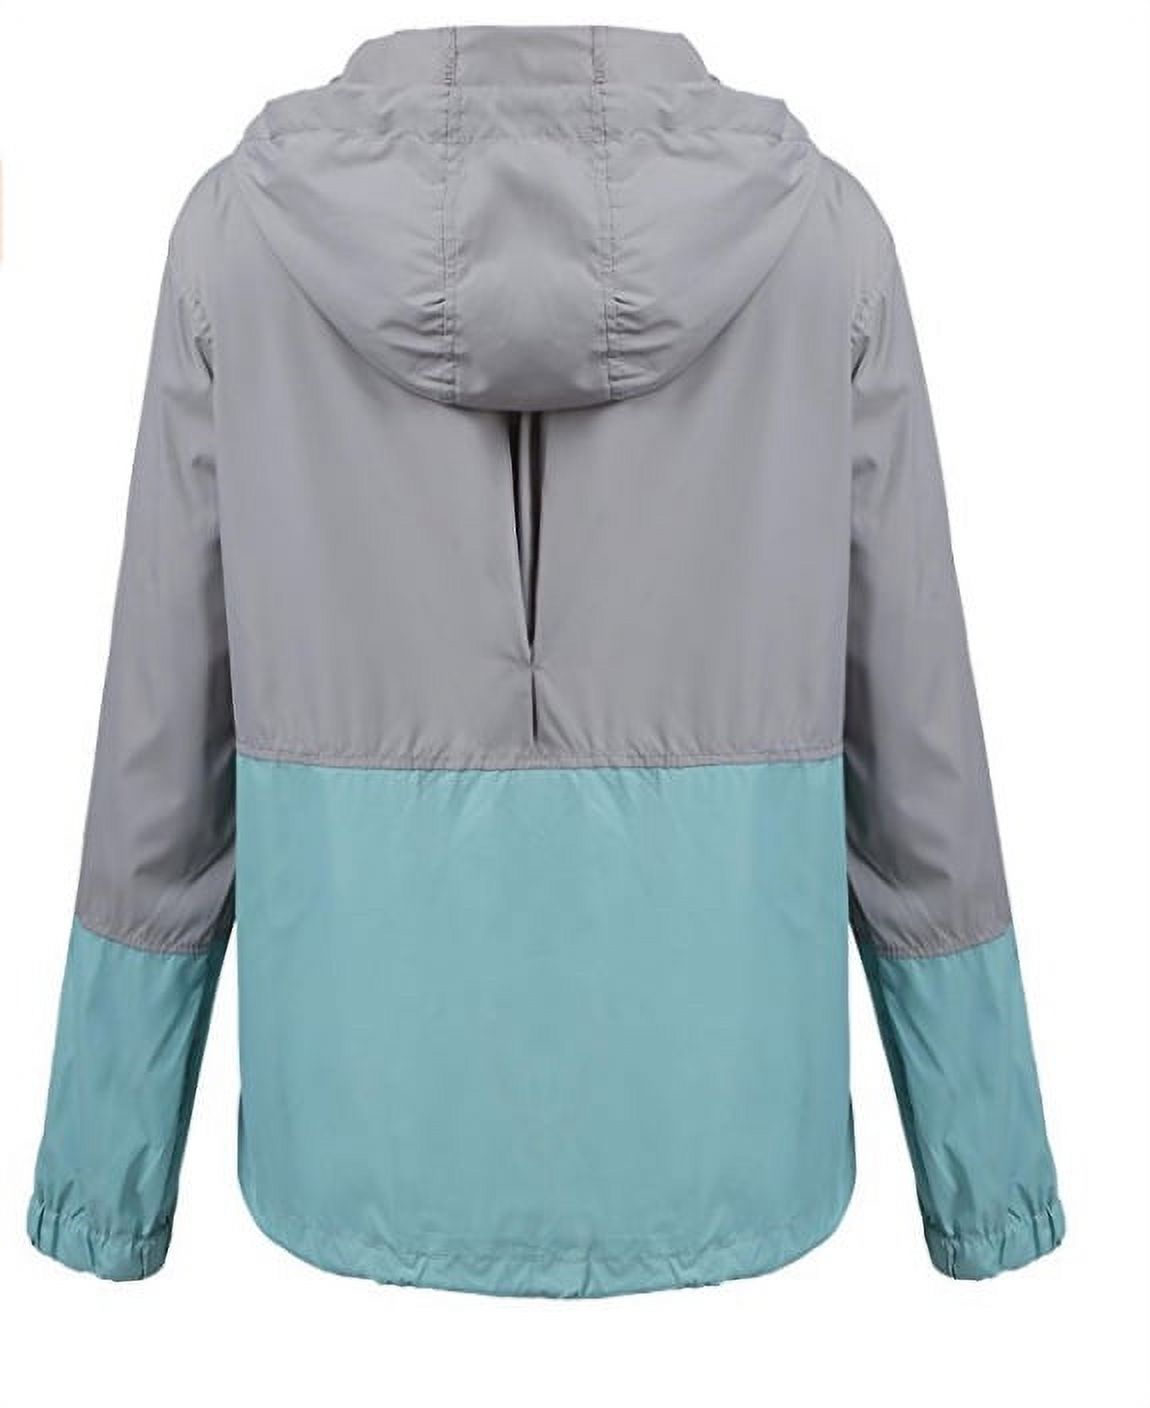 Springcmy Women´s Waterproof Raincoat Outdoor Hooded Rain Jacket Windbreaker - image 3 of 3